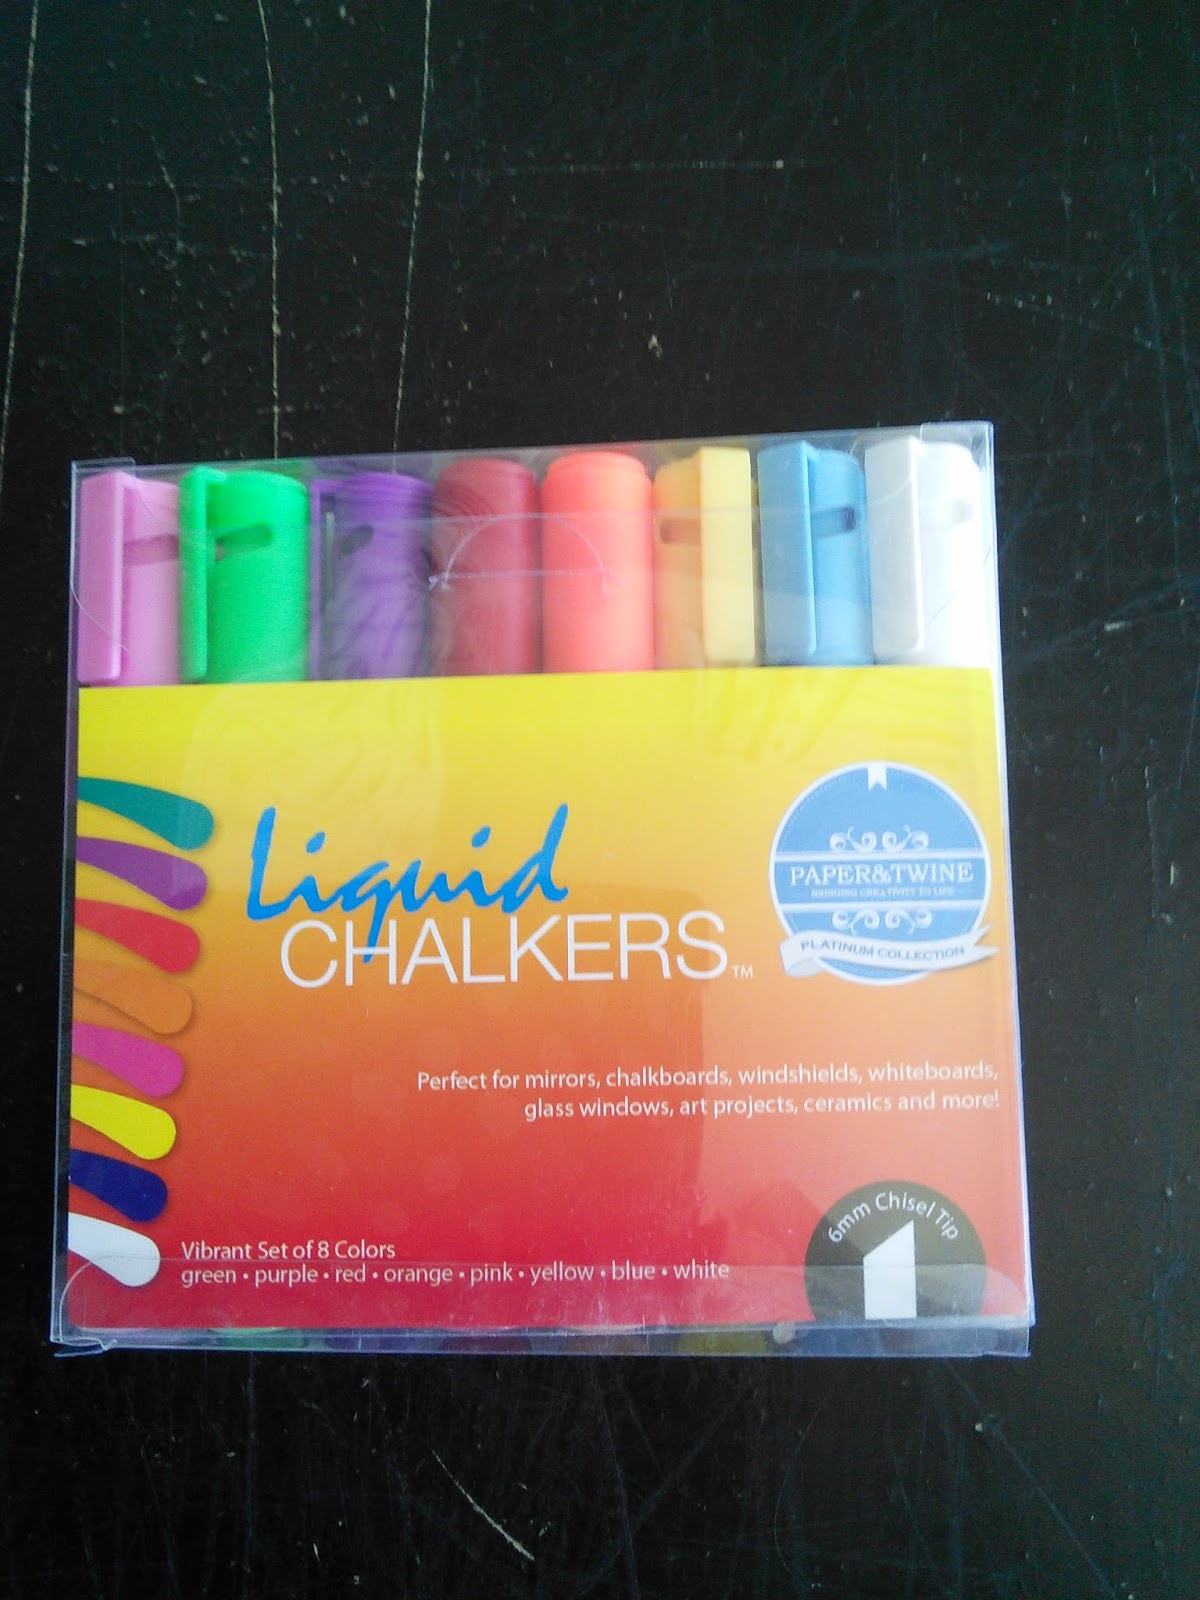 Best Liquid Chalk Markers –